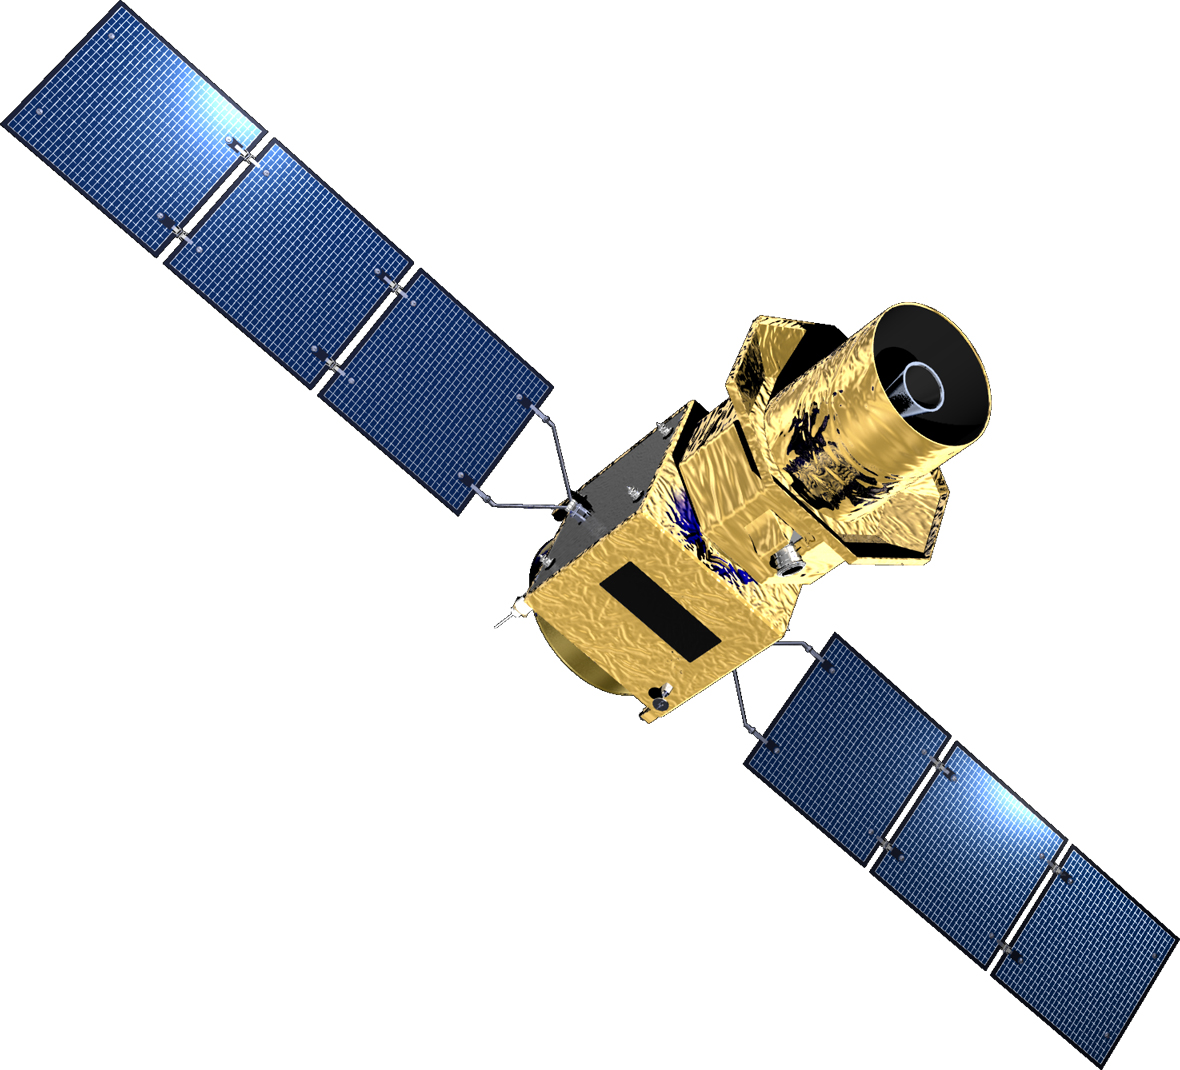 LiteBIRD衛星(概念図)
(C) JAXA宇宙科学研究所